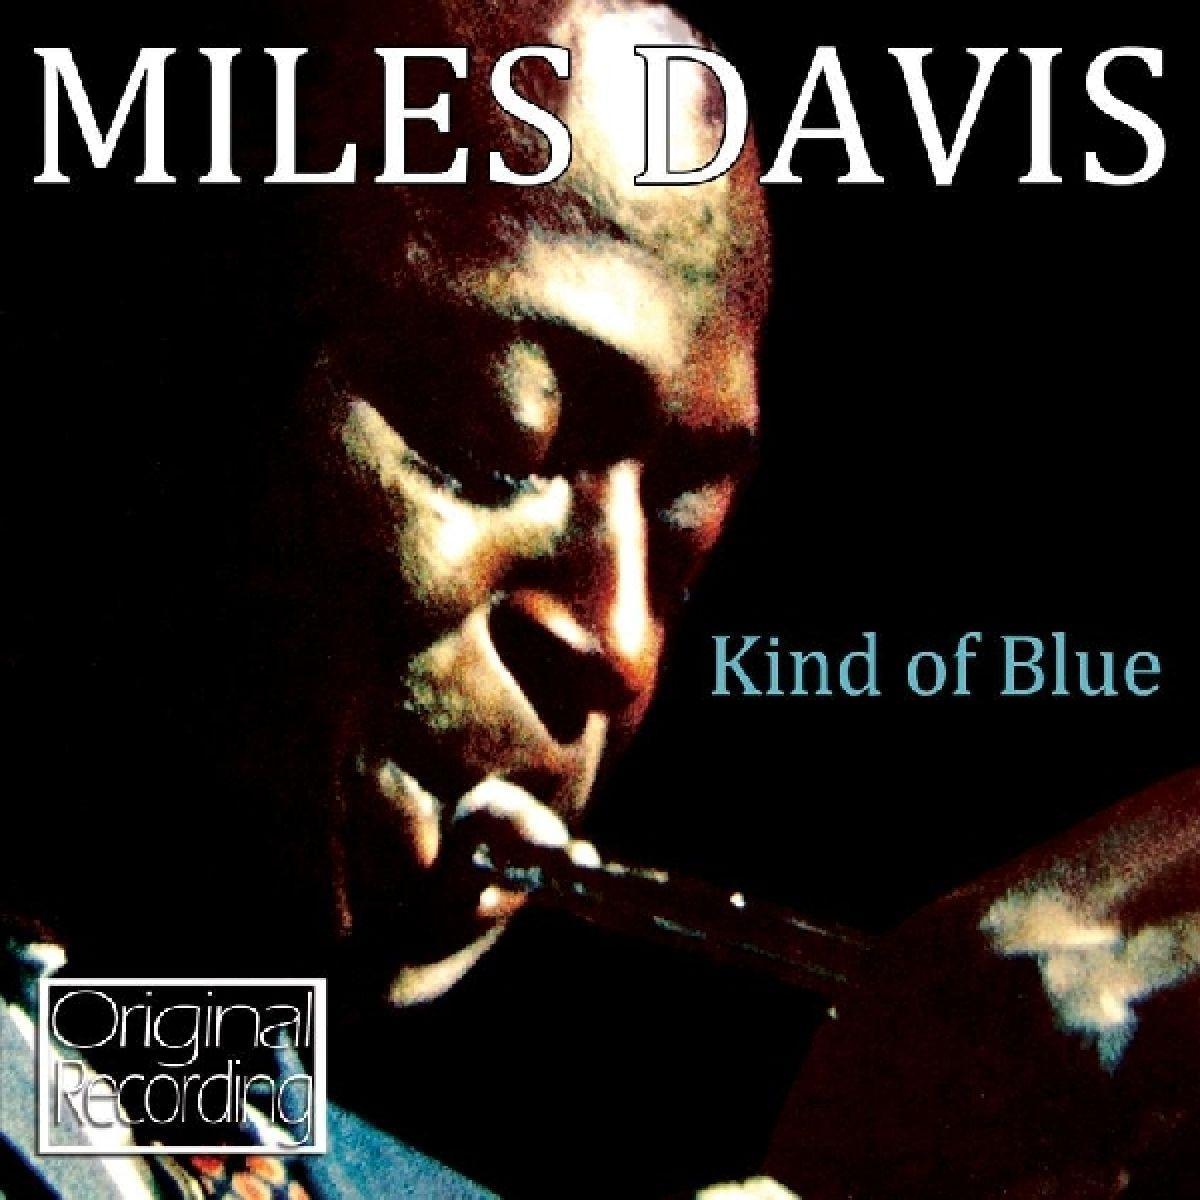 Blue miles. Miles Davis - kind of Blue (Full album) 1959. Kind of Blue Майлз Дэвис. Miles Davis kind of Blue обложка. Miles компакт диск.